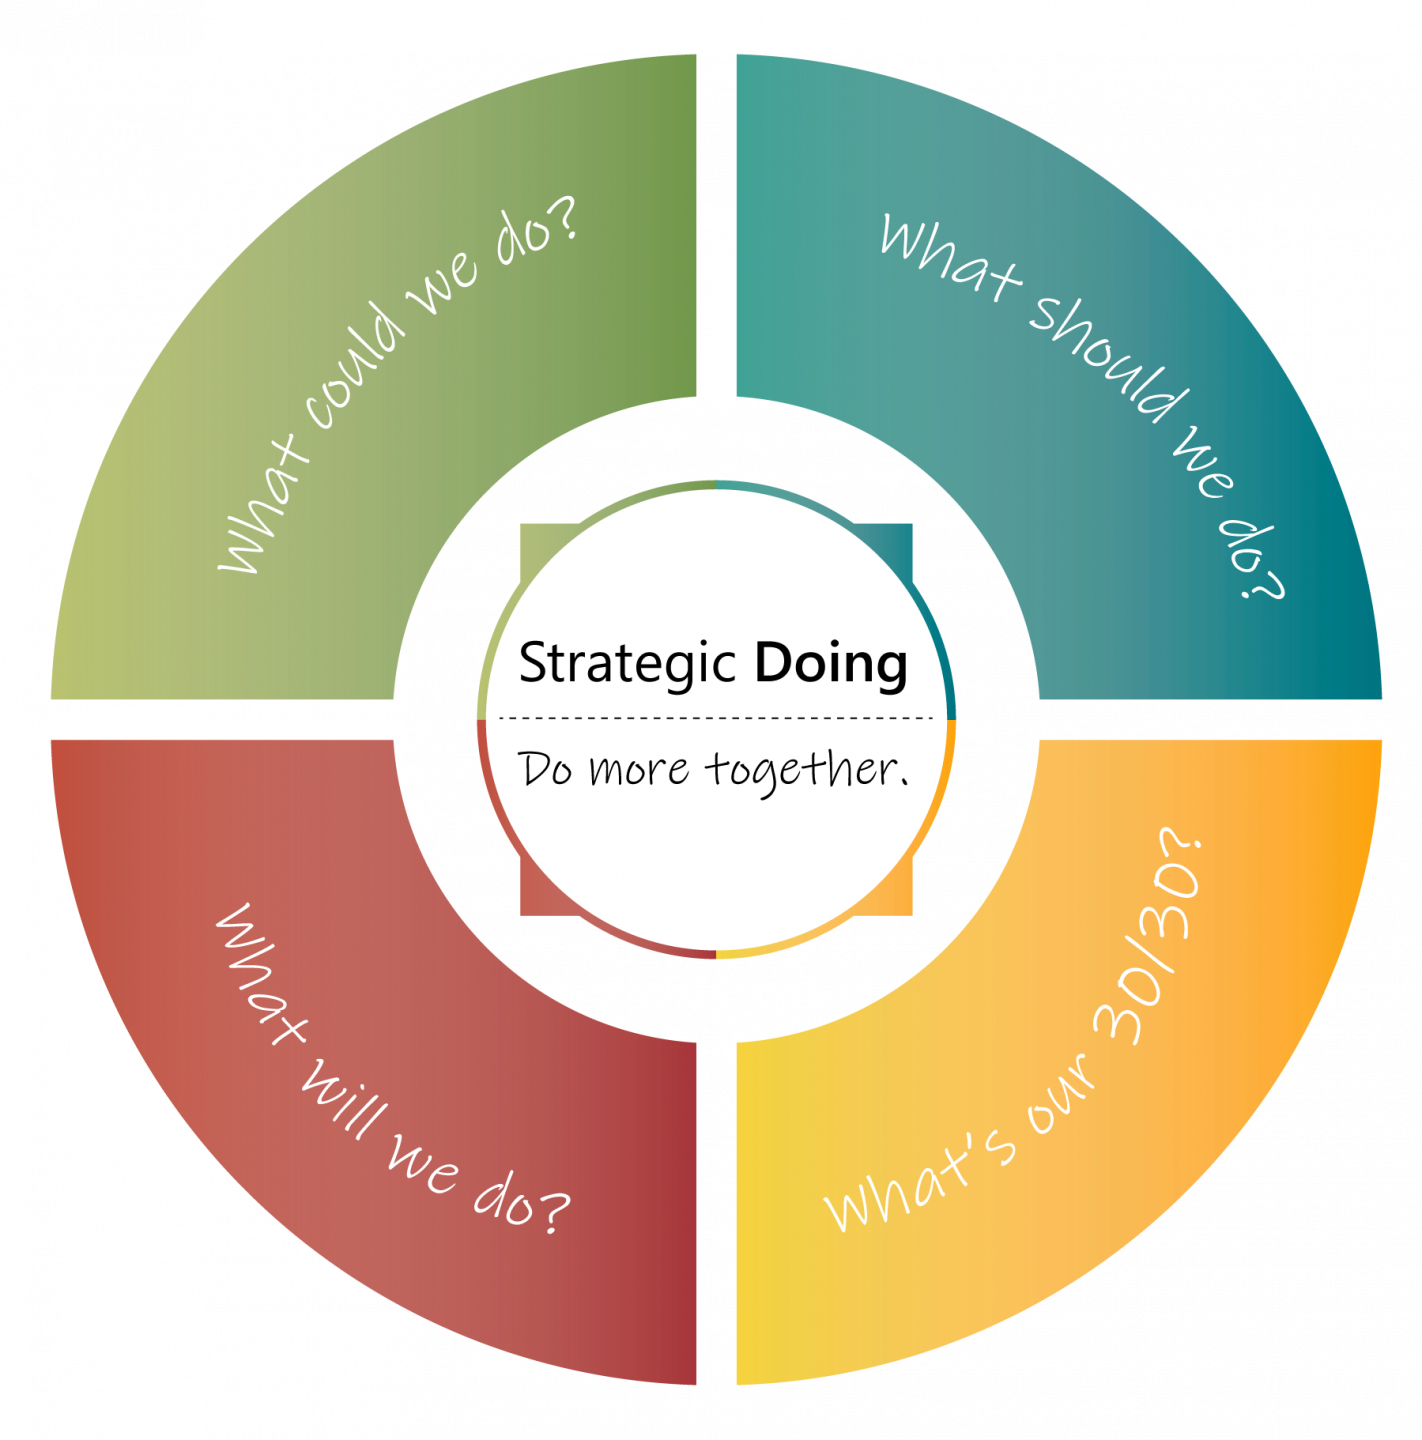 Image depicting Strategic Doing questions